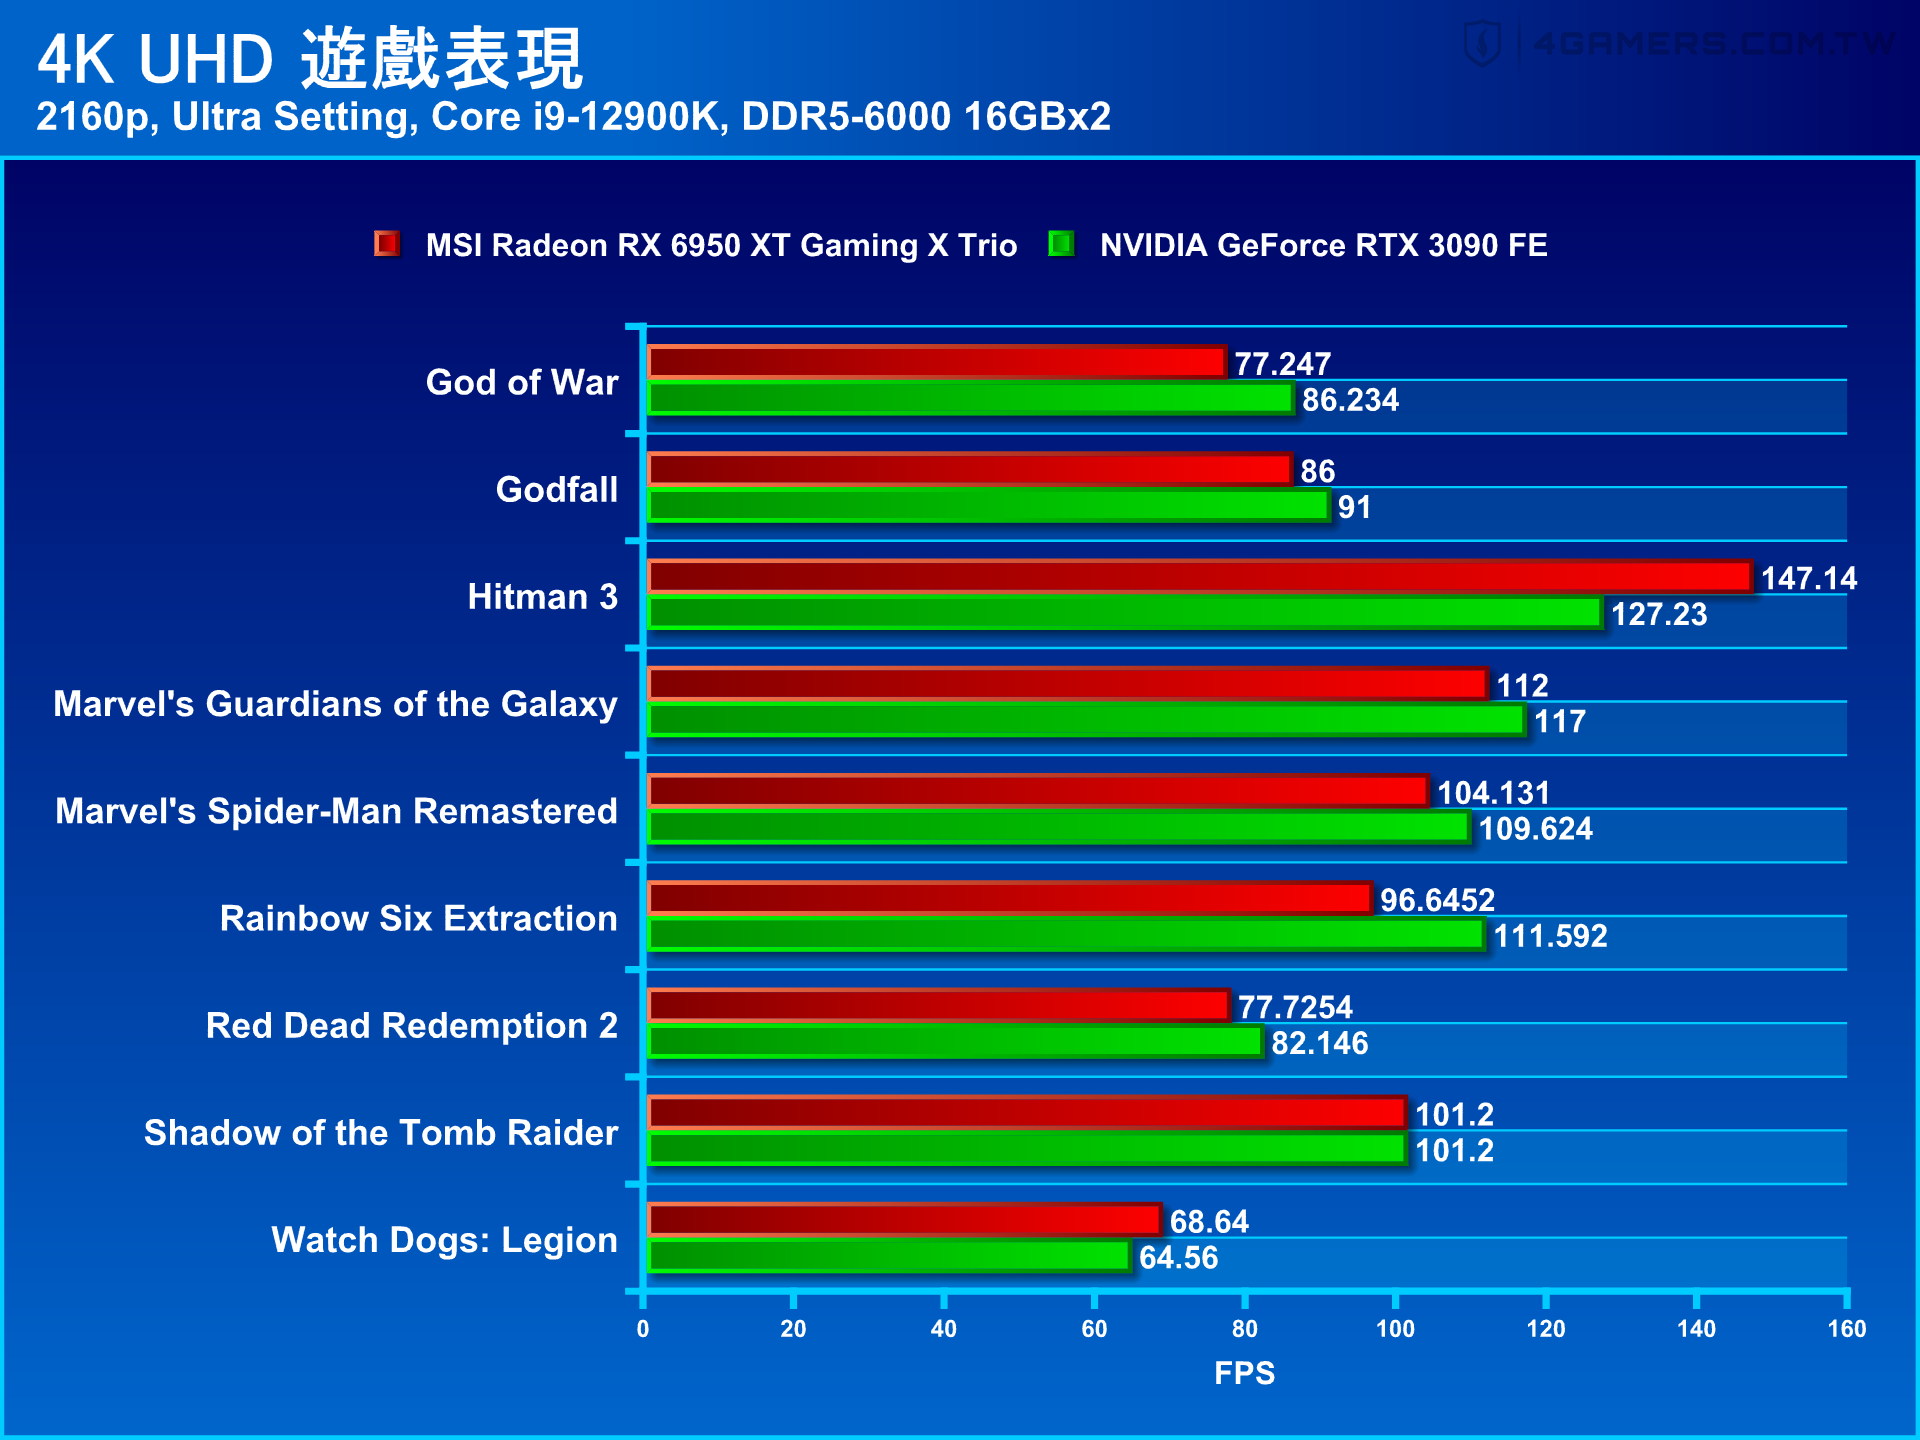 MSI Radeon RX 6950 XT Gaming X Trio